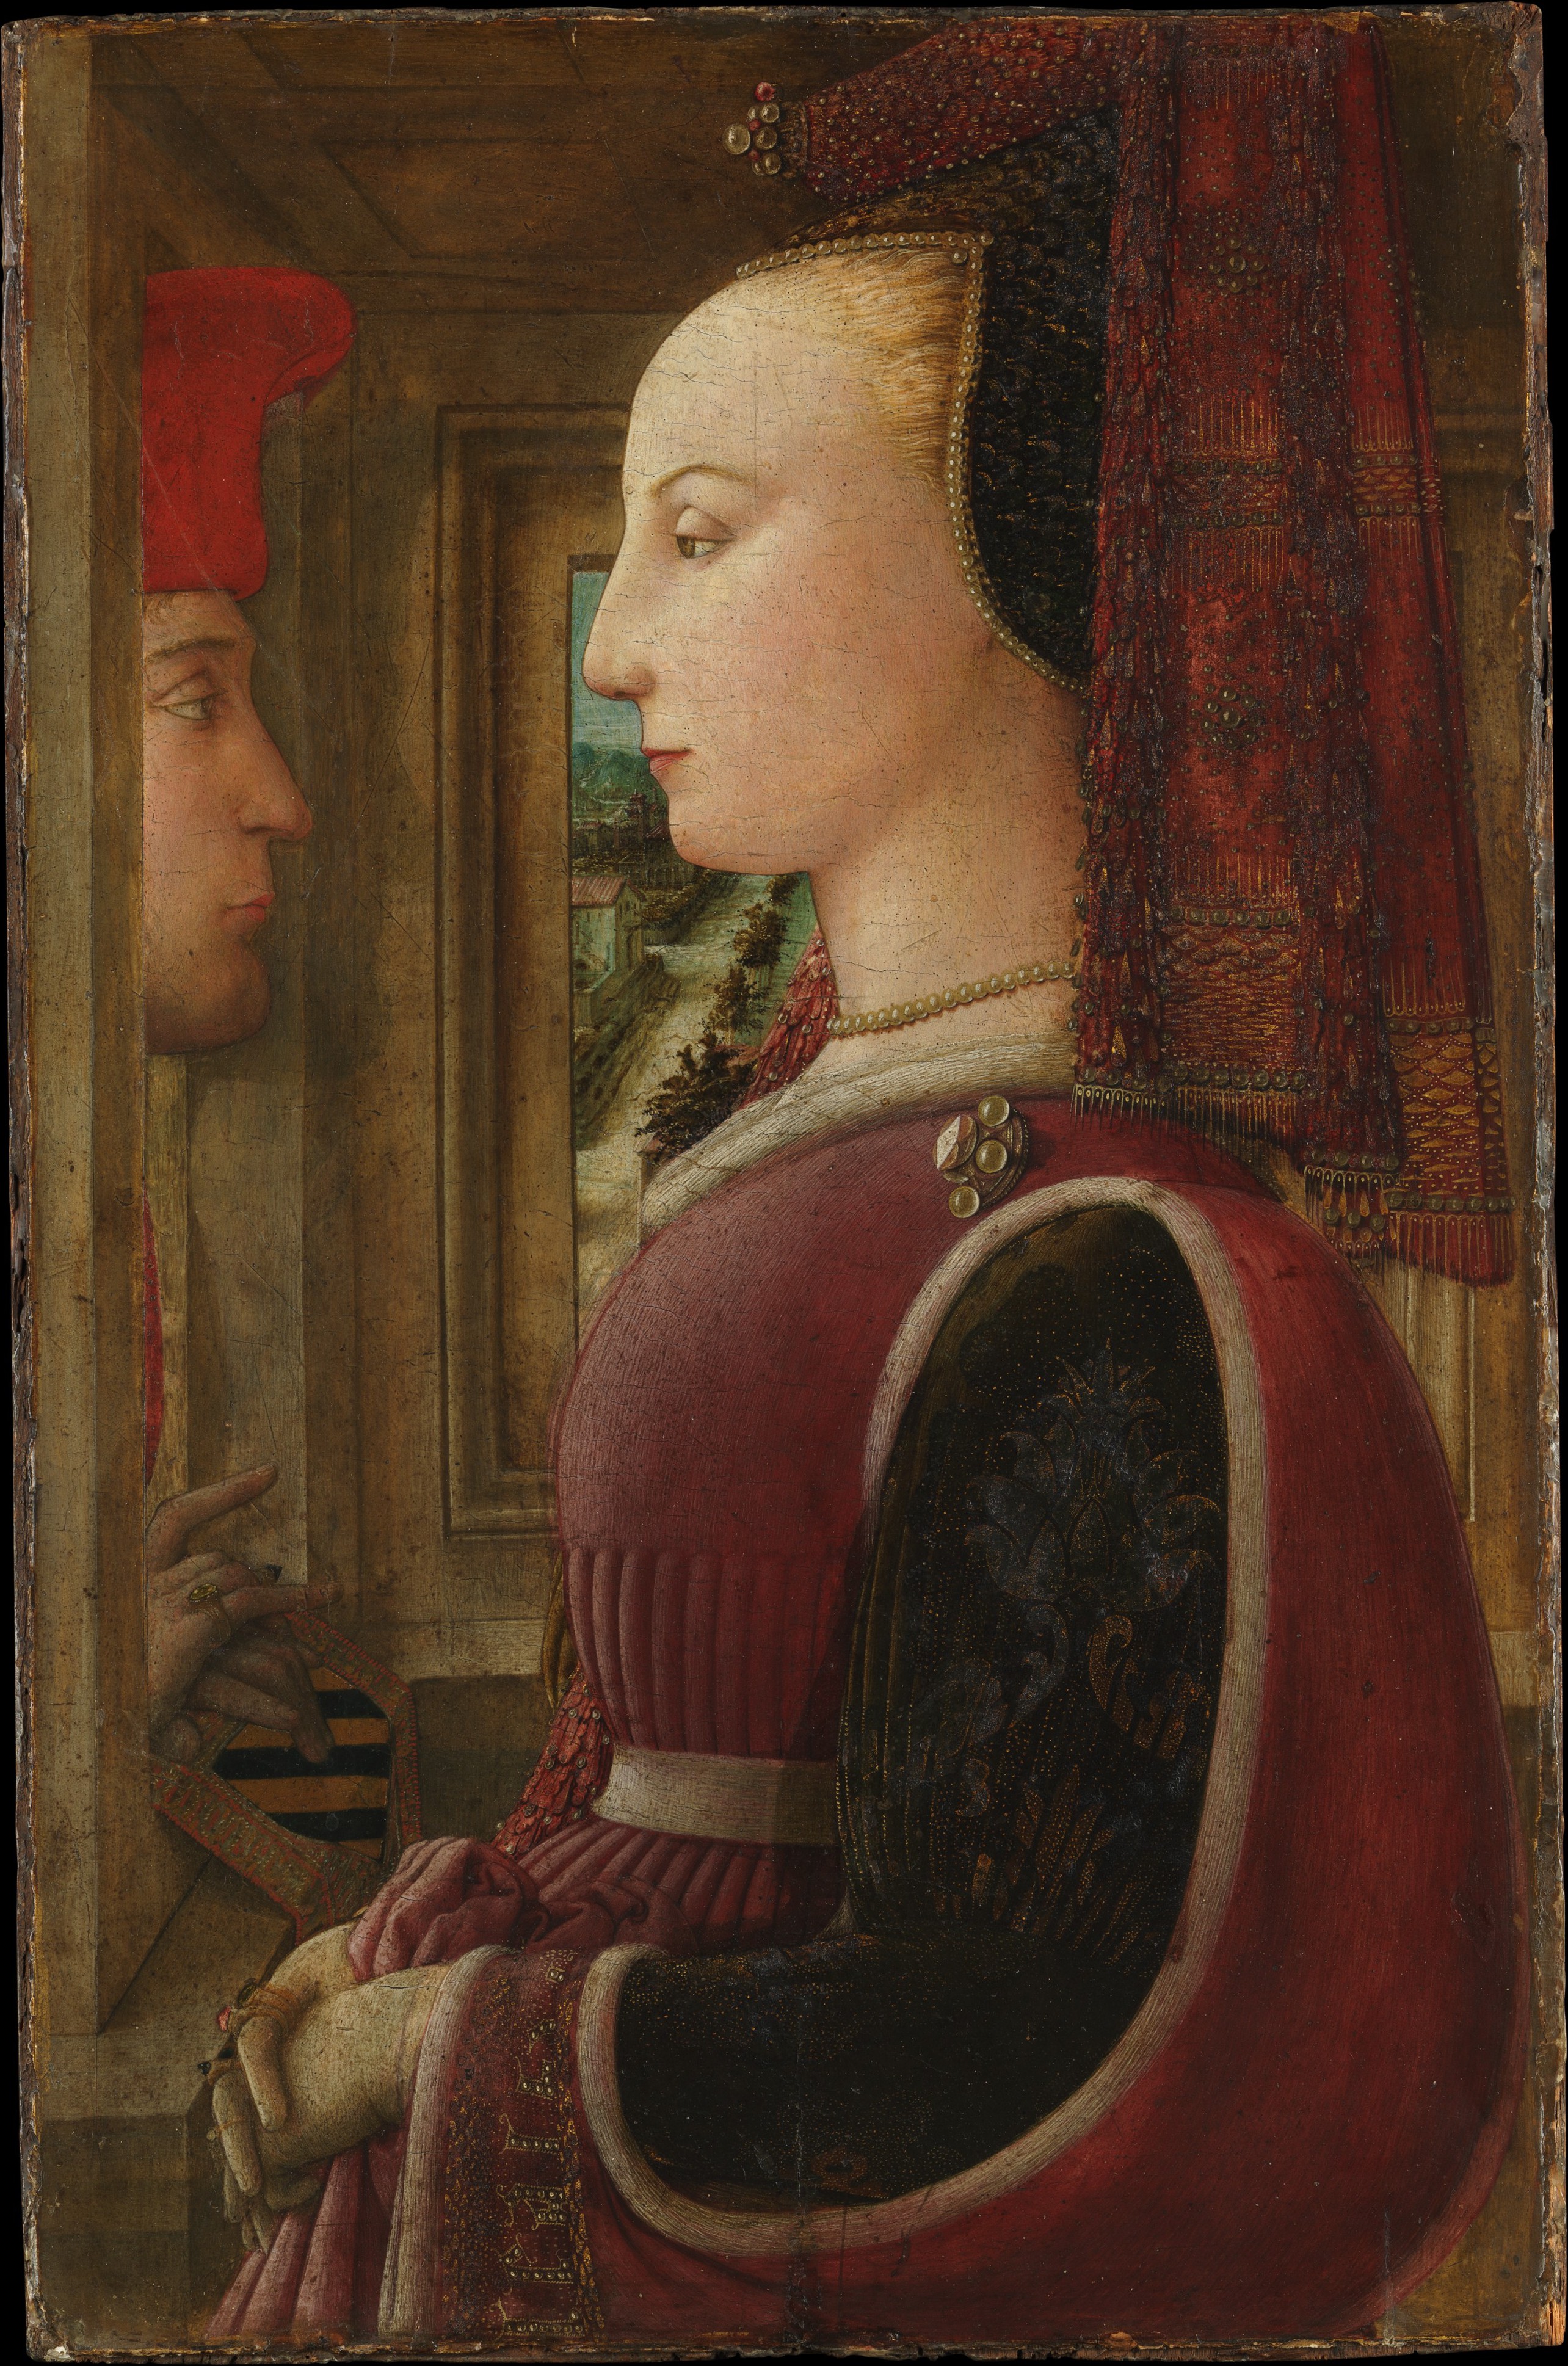 Pencere Pervazındaki Bir Adam ile Bir Kadının Portresi (orig. "Portrait of a Woman with a Man at a Casement") by Fra Filippo Lippi - 1440 civarı - 64.1 x 41.9 cm 